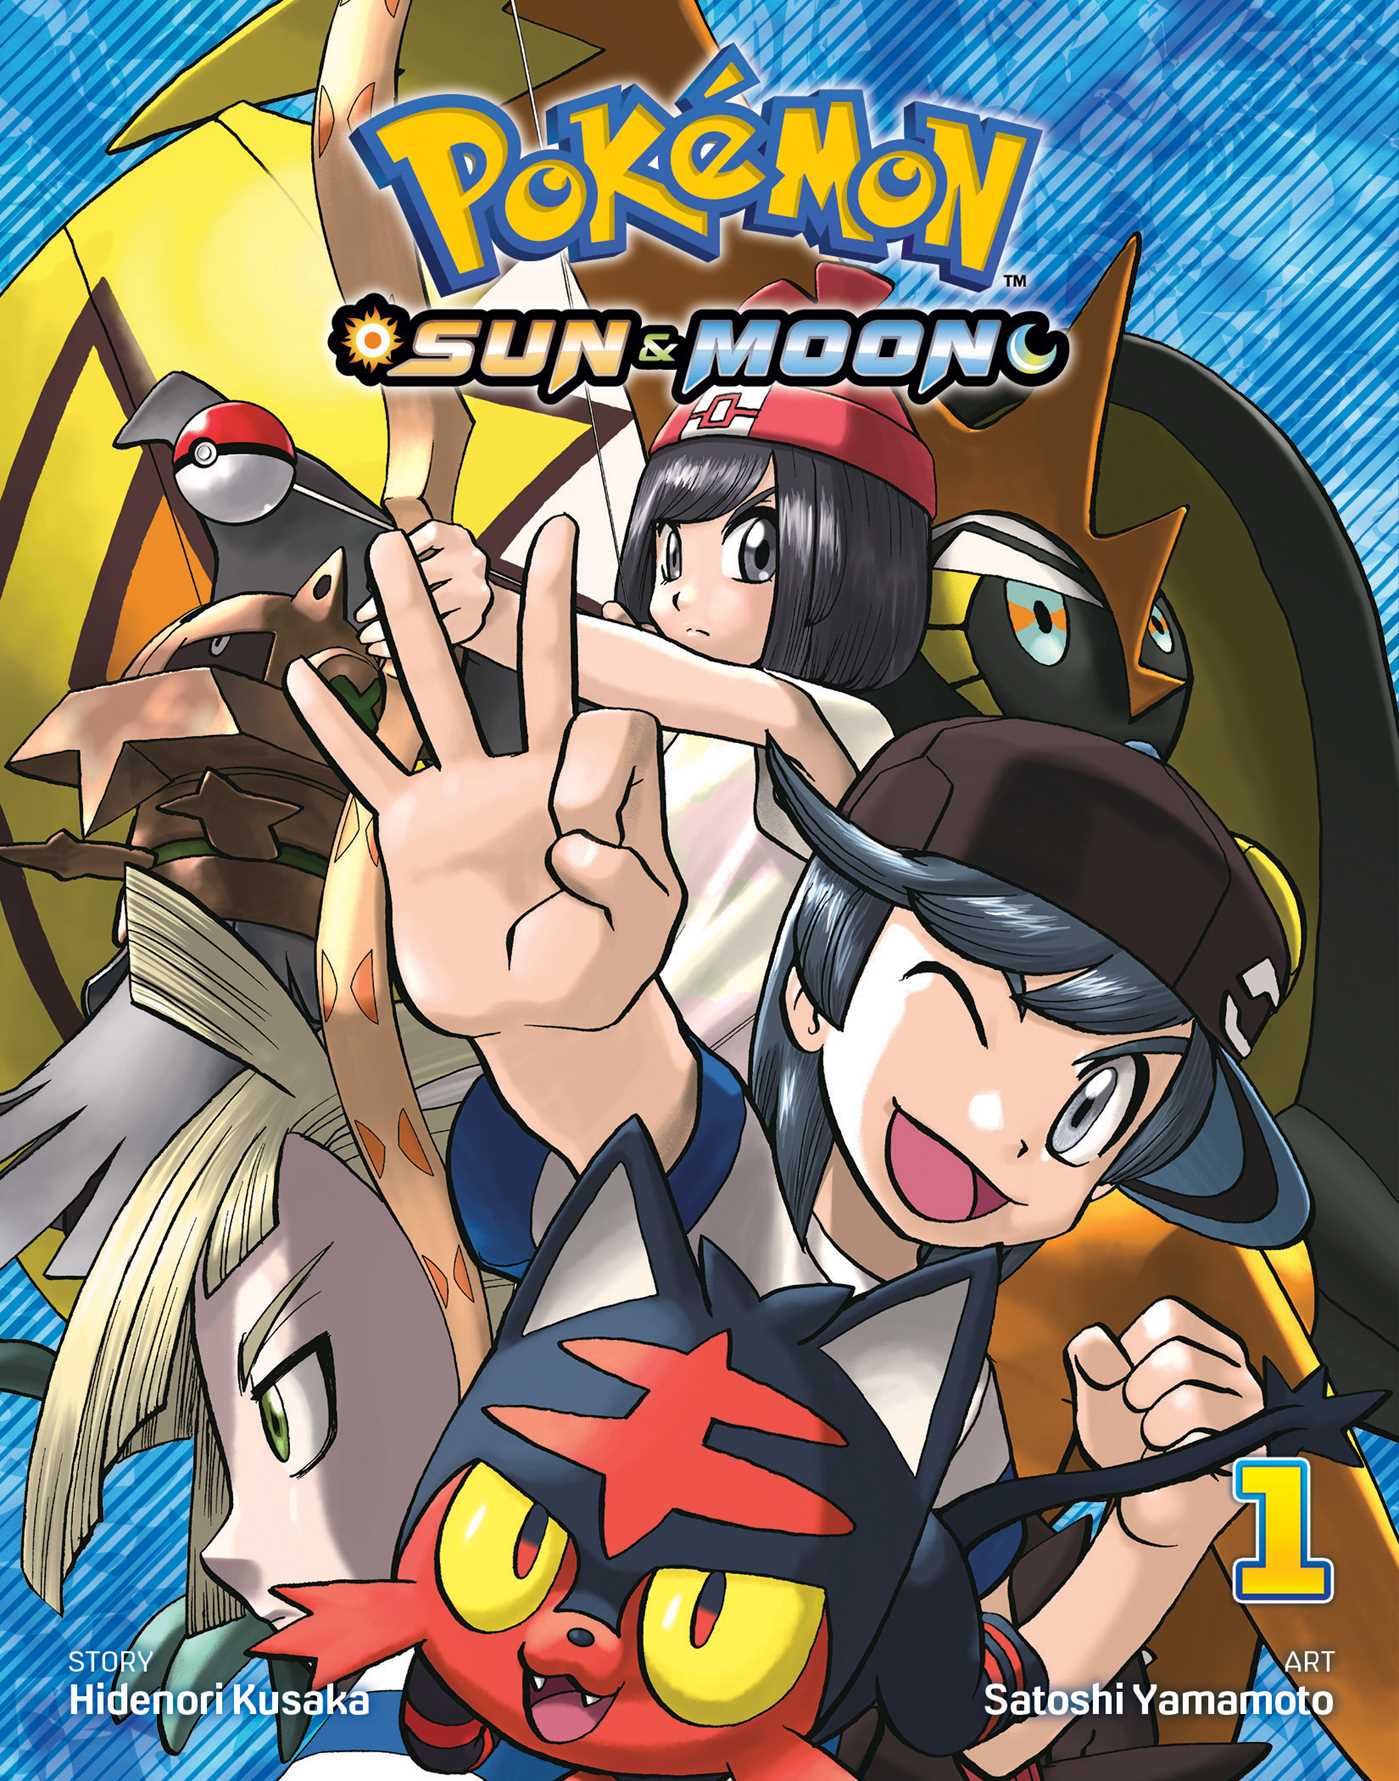 Viz Media to publish new manga series 'Pokemon Sun & Moon'